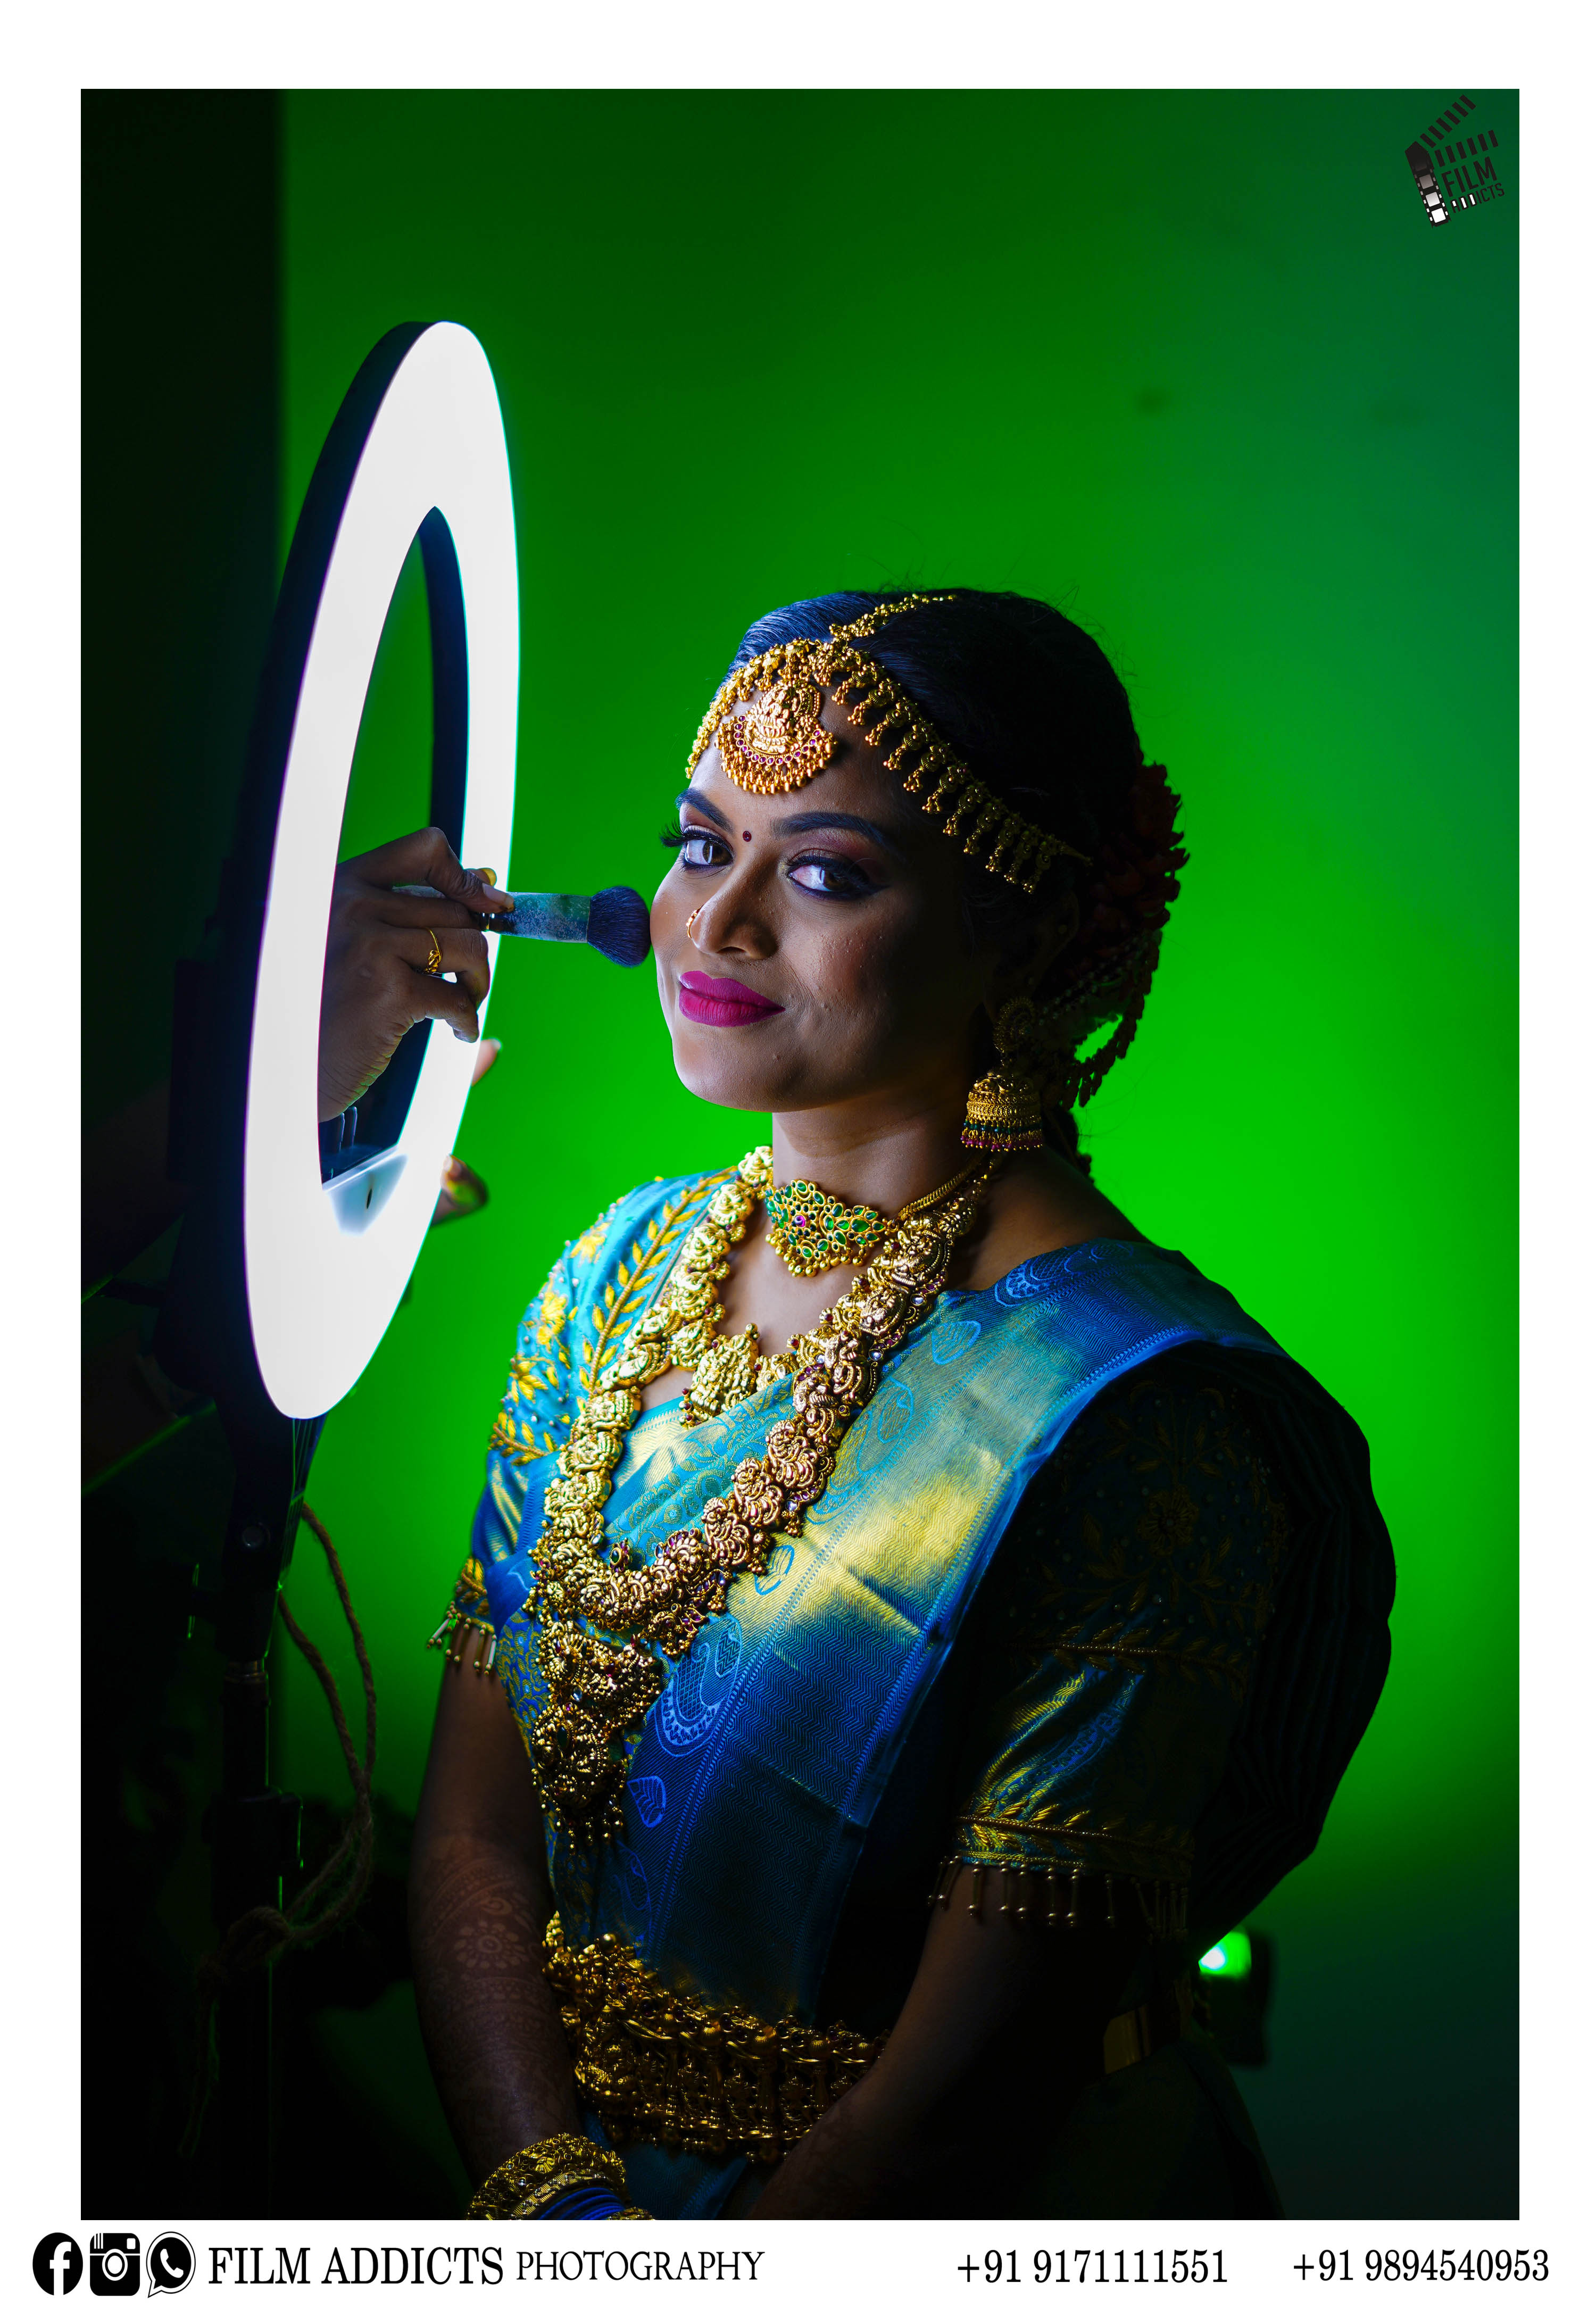 Best Wedding Photographers in Dindigul-FilmAddicts Photography, Best candid photography in Dindigul | Madurai  | Tamil Nadu | FilmAddicts Photography.